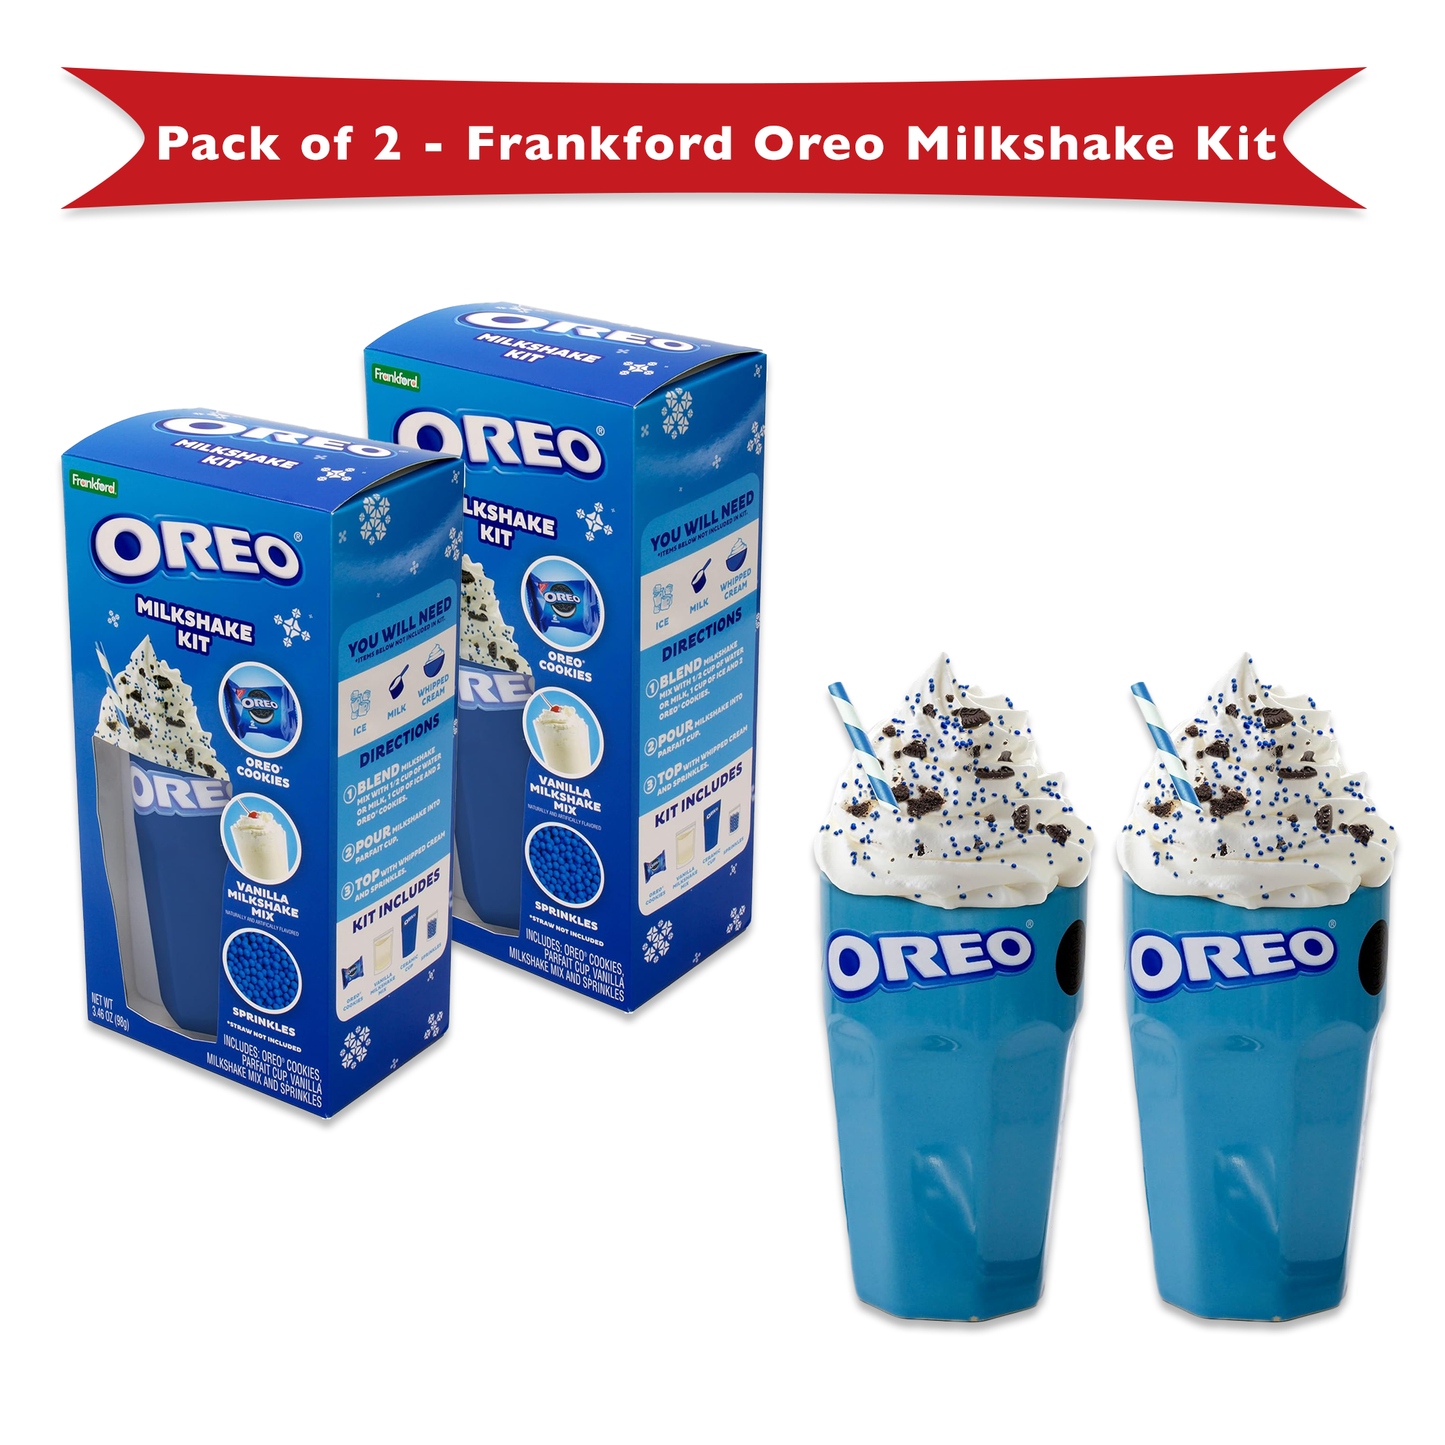 Milkshake Kit Instructions